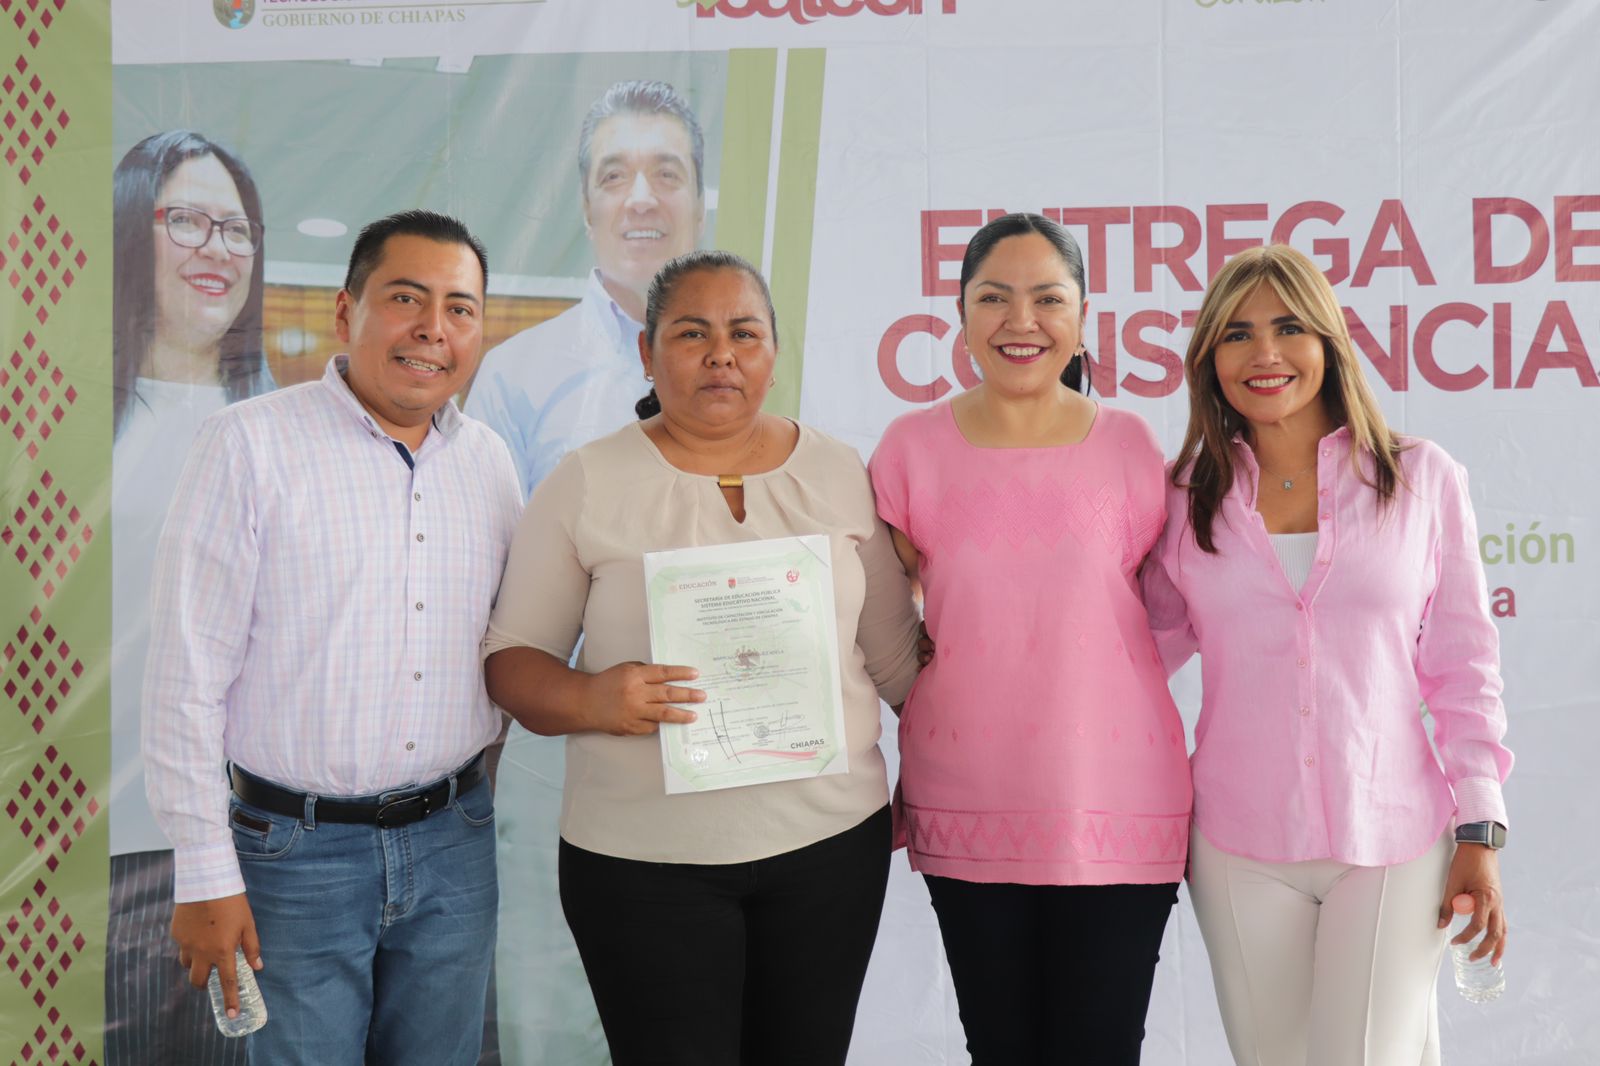 Aulas Móviles llevan capacitación a localidades de Chiapa de Corzo